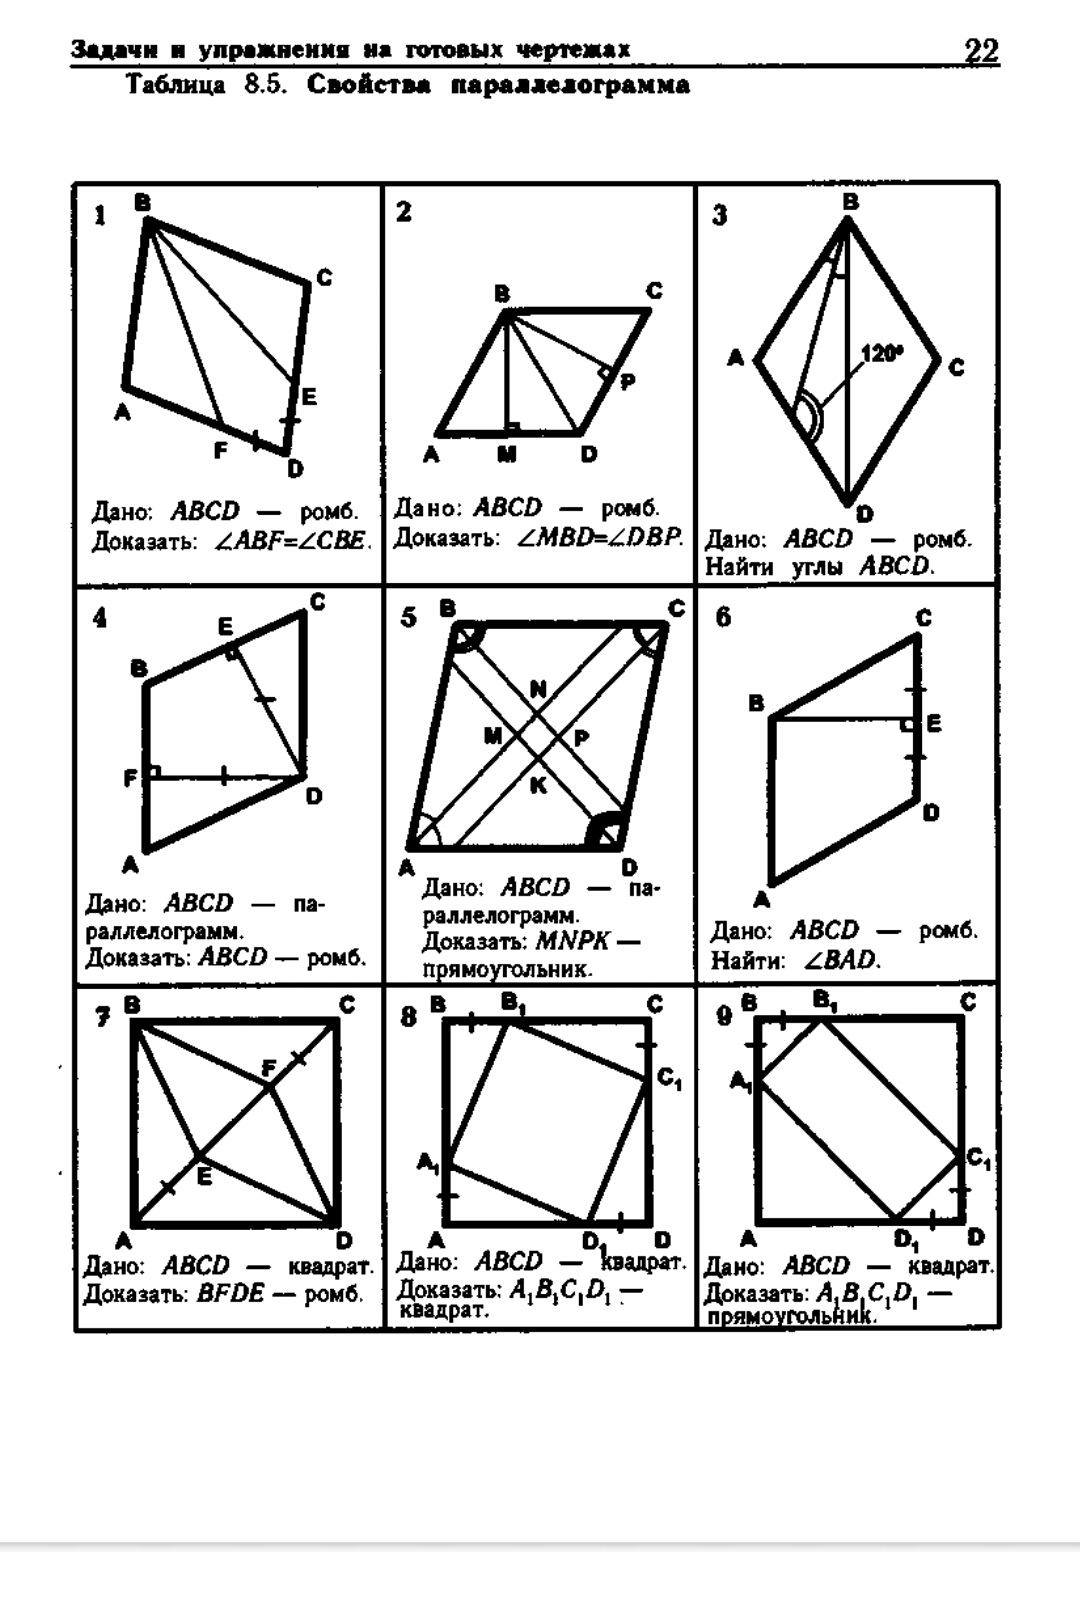 Задачи на чертежах 7 9. Рабинович геометрия 8.2 таблица. Задачи на готовых чертежах 8 класс геометрия Атанасян прямоугольник. Задачи по готовым чертежам параллелограмм. Таблица 9.3 геометрия Рабинович.